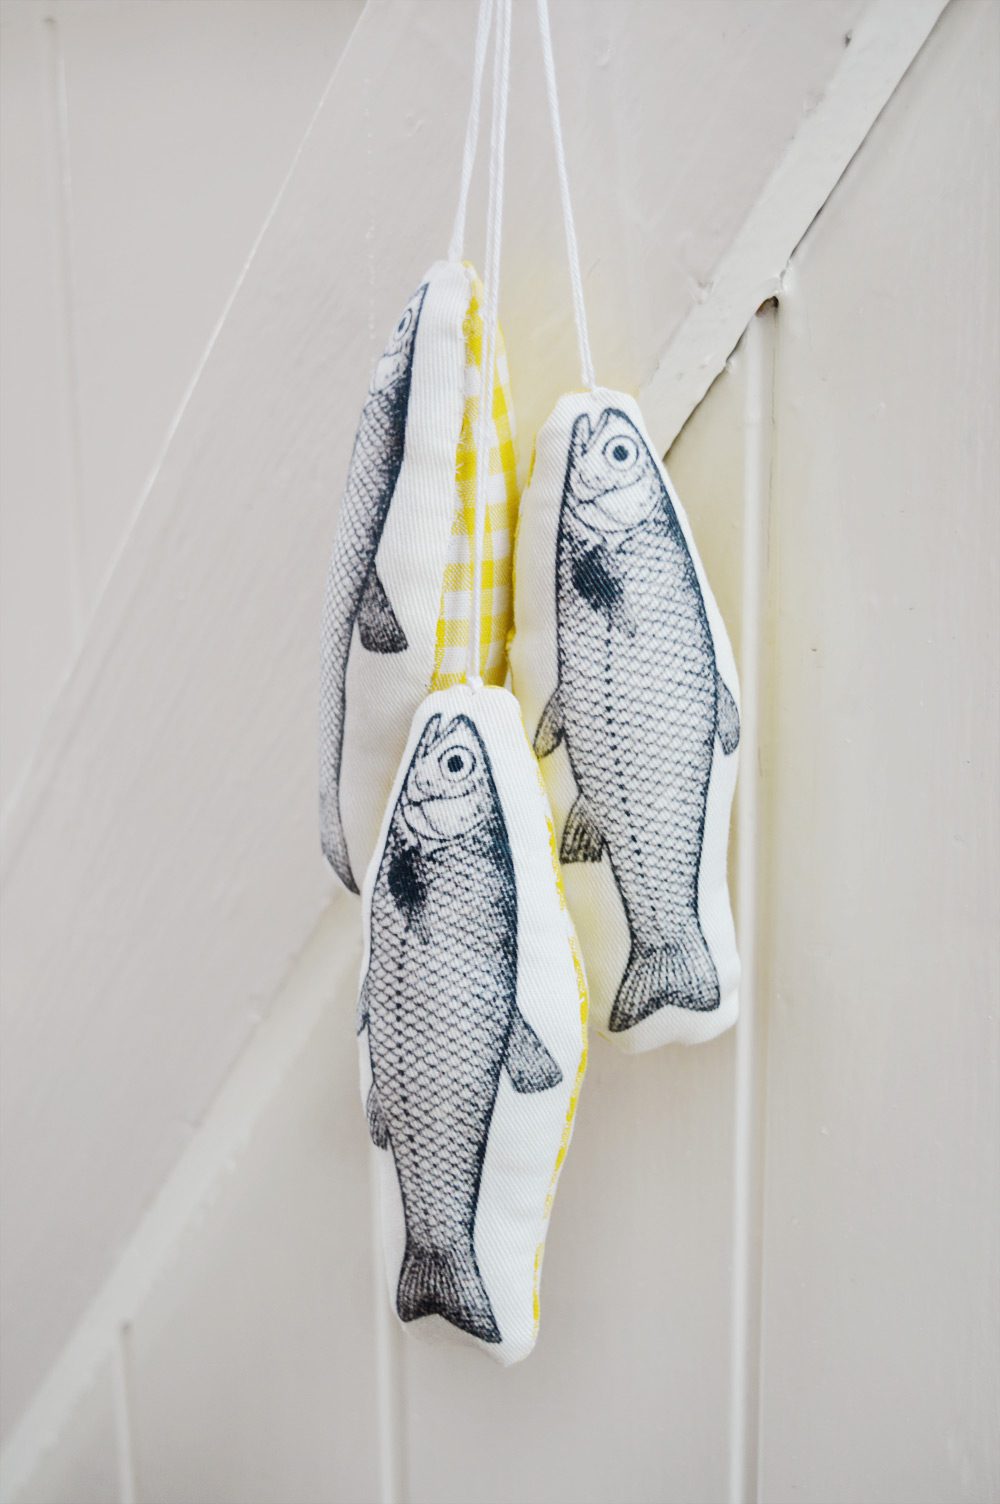 DIY hanging fish decoration #sewing tutorial